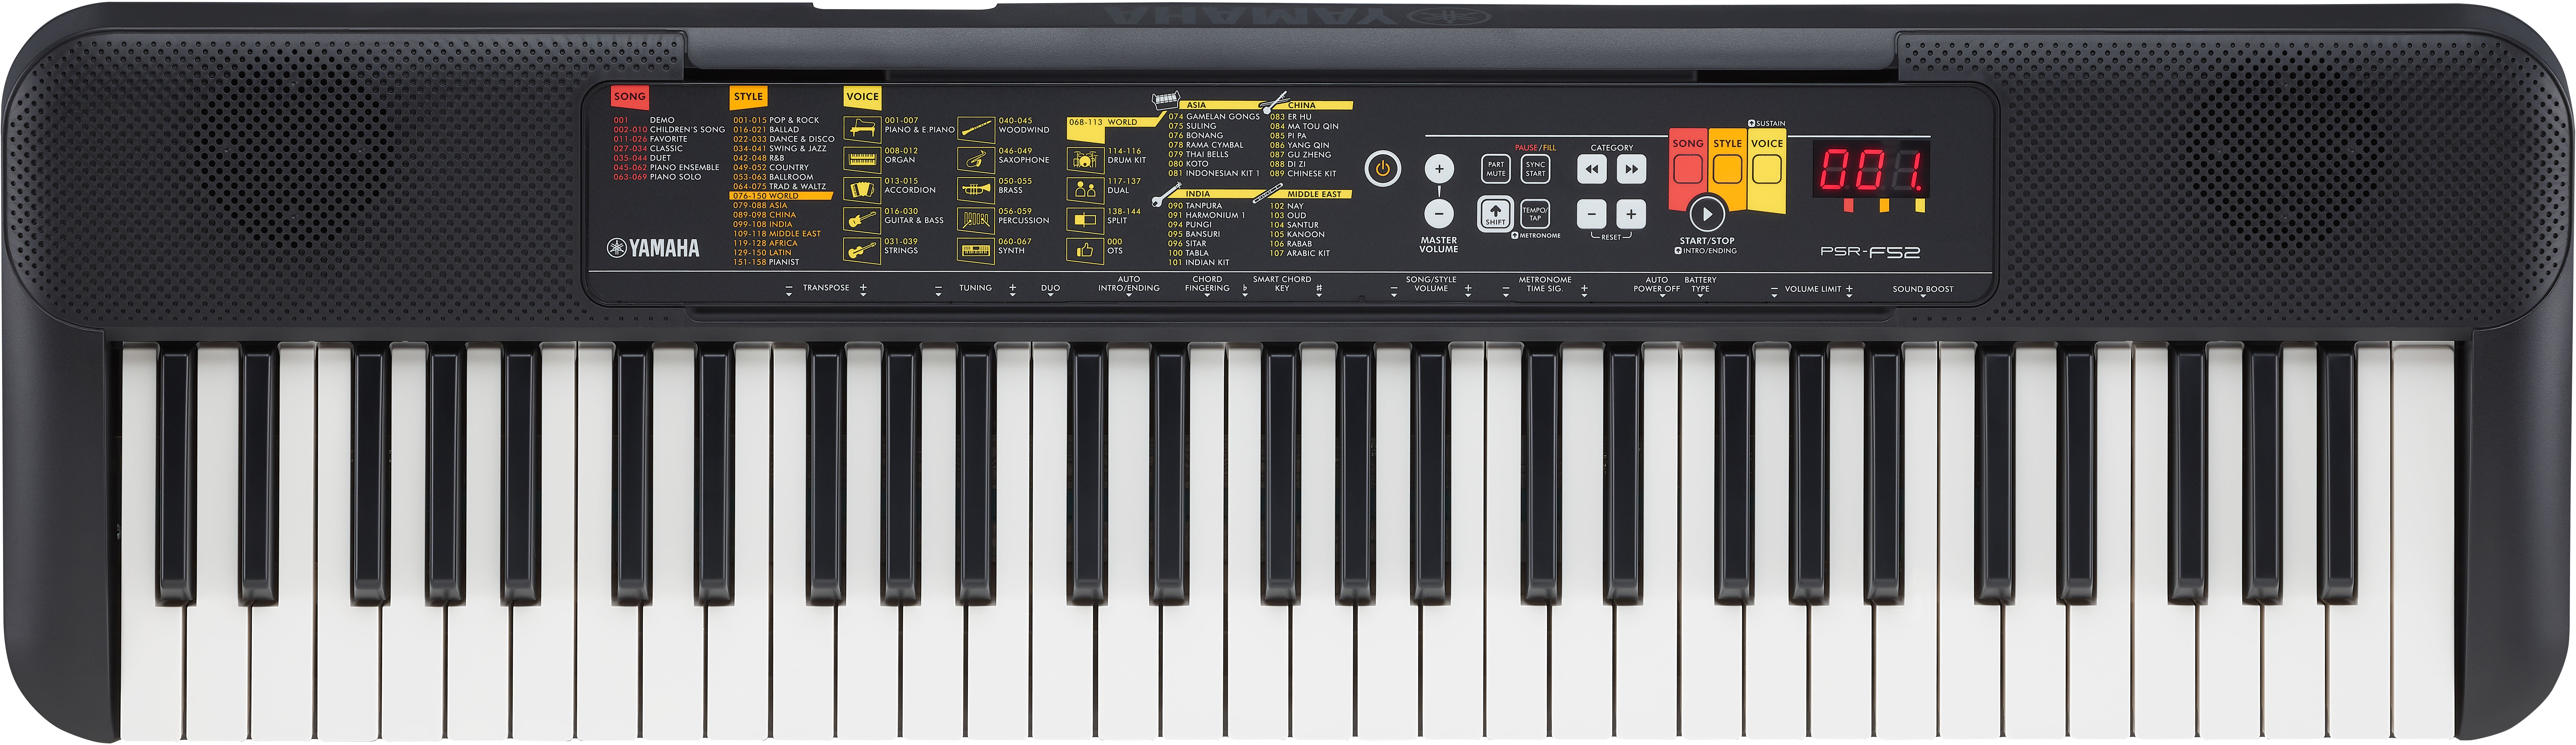 Teclado Musical Yamaha PSR-F52 61 teclas + Suporte X